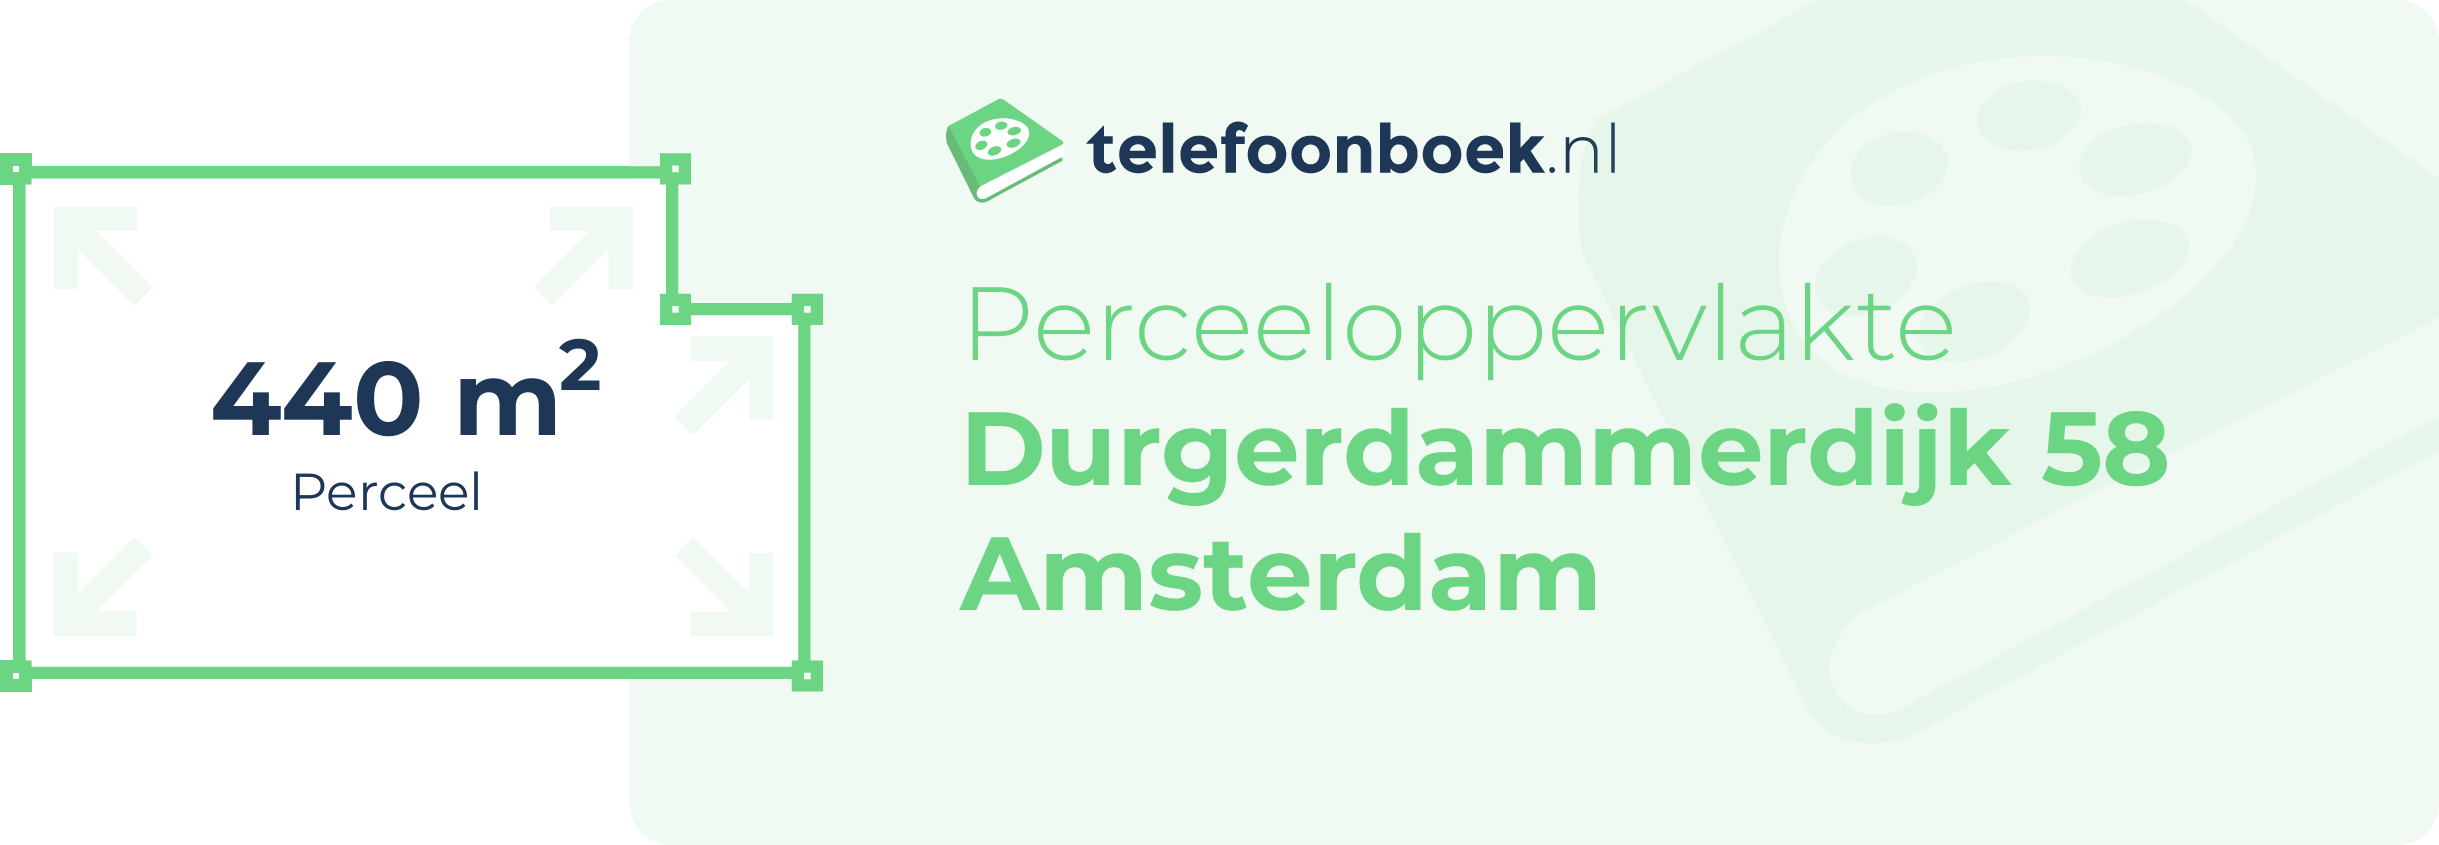 Perceeloppervlakte Durgerdammerdijk 58 Amsterdam